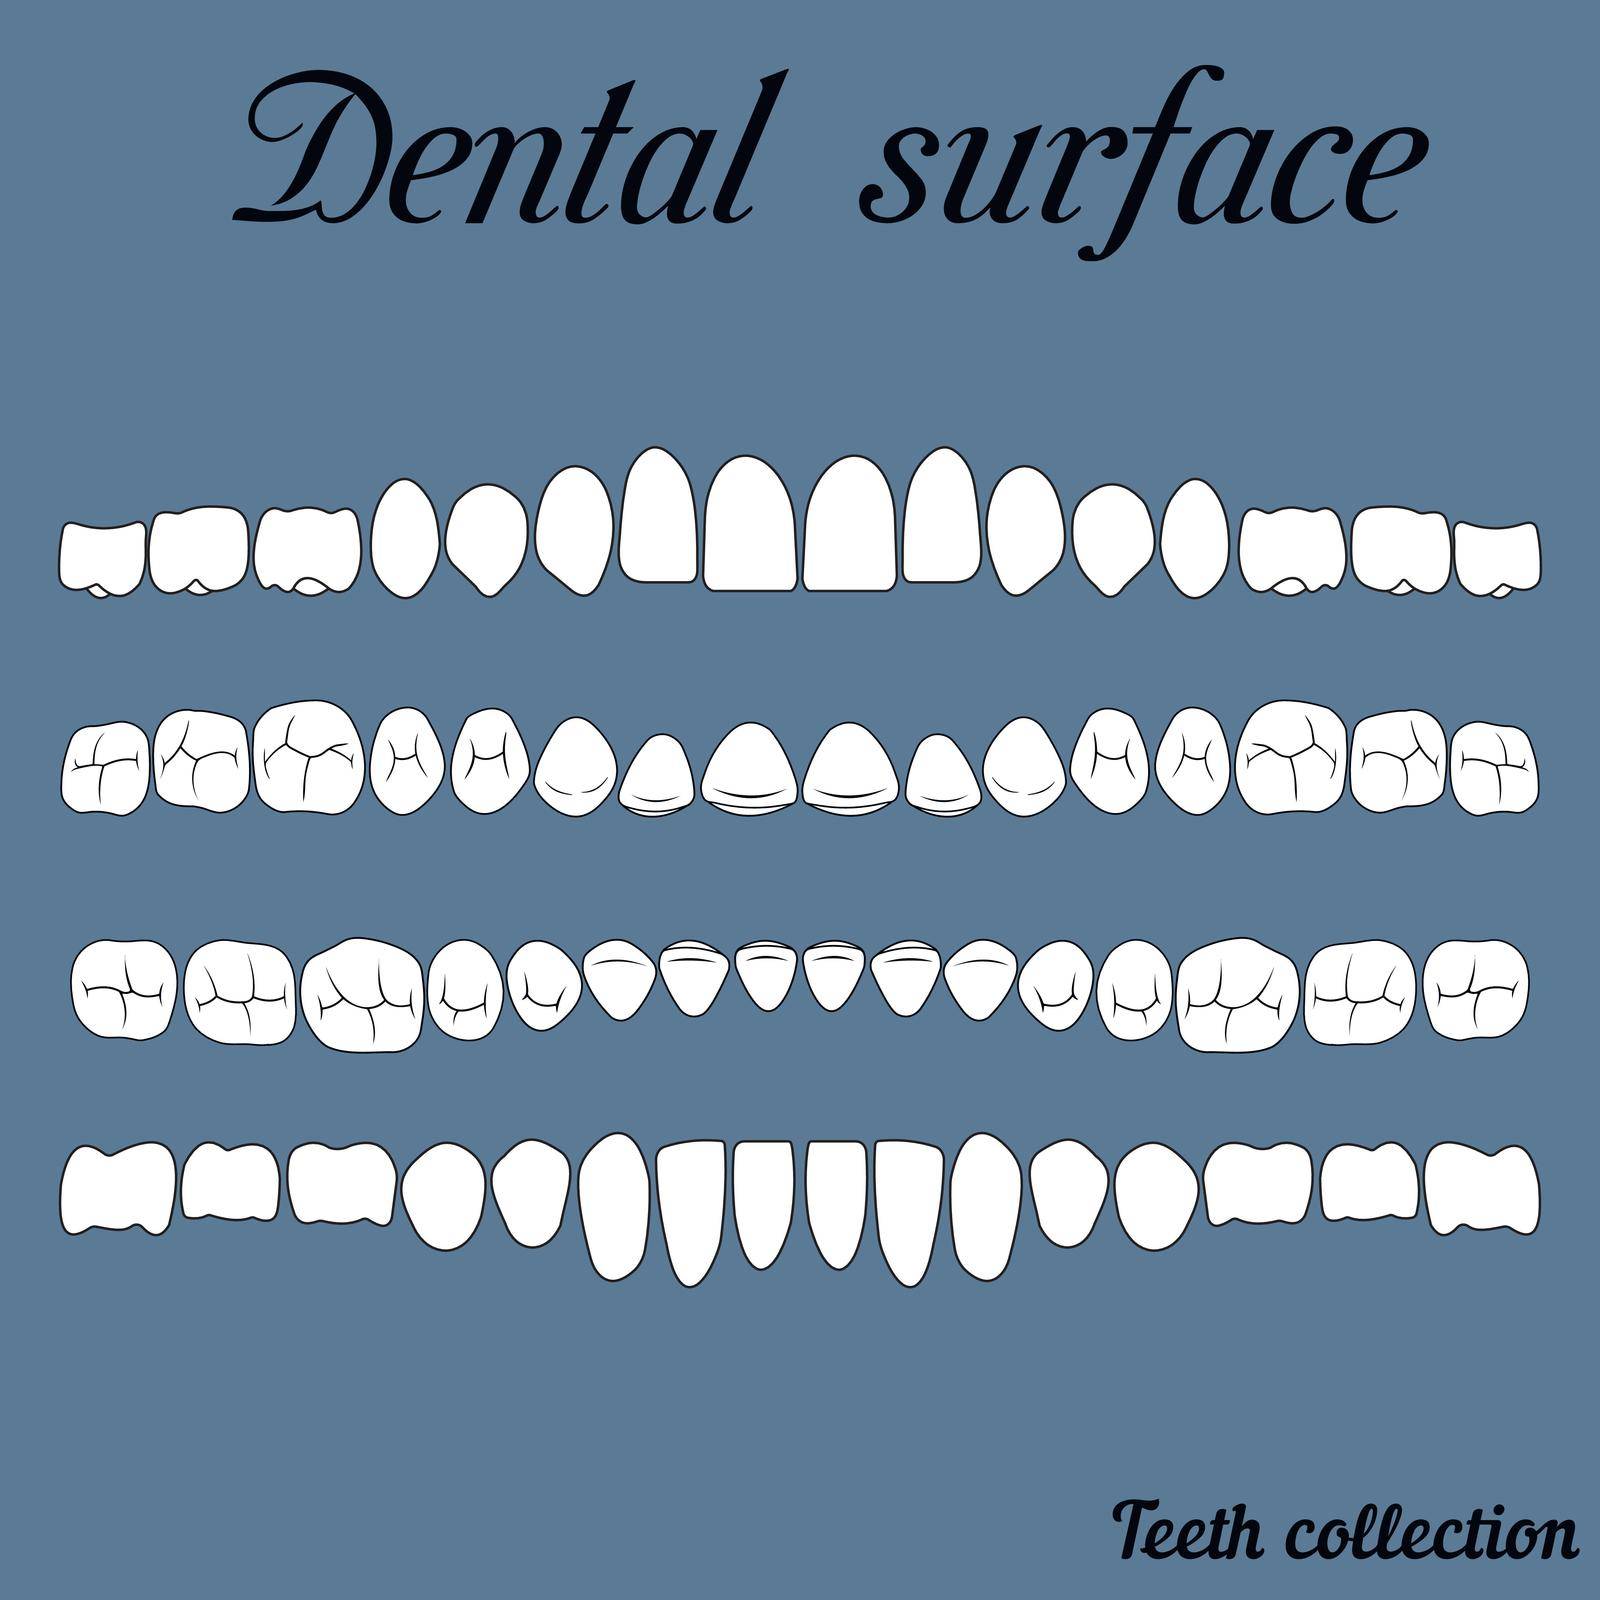 dental surface by koksikoks